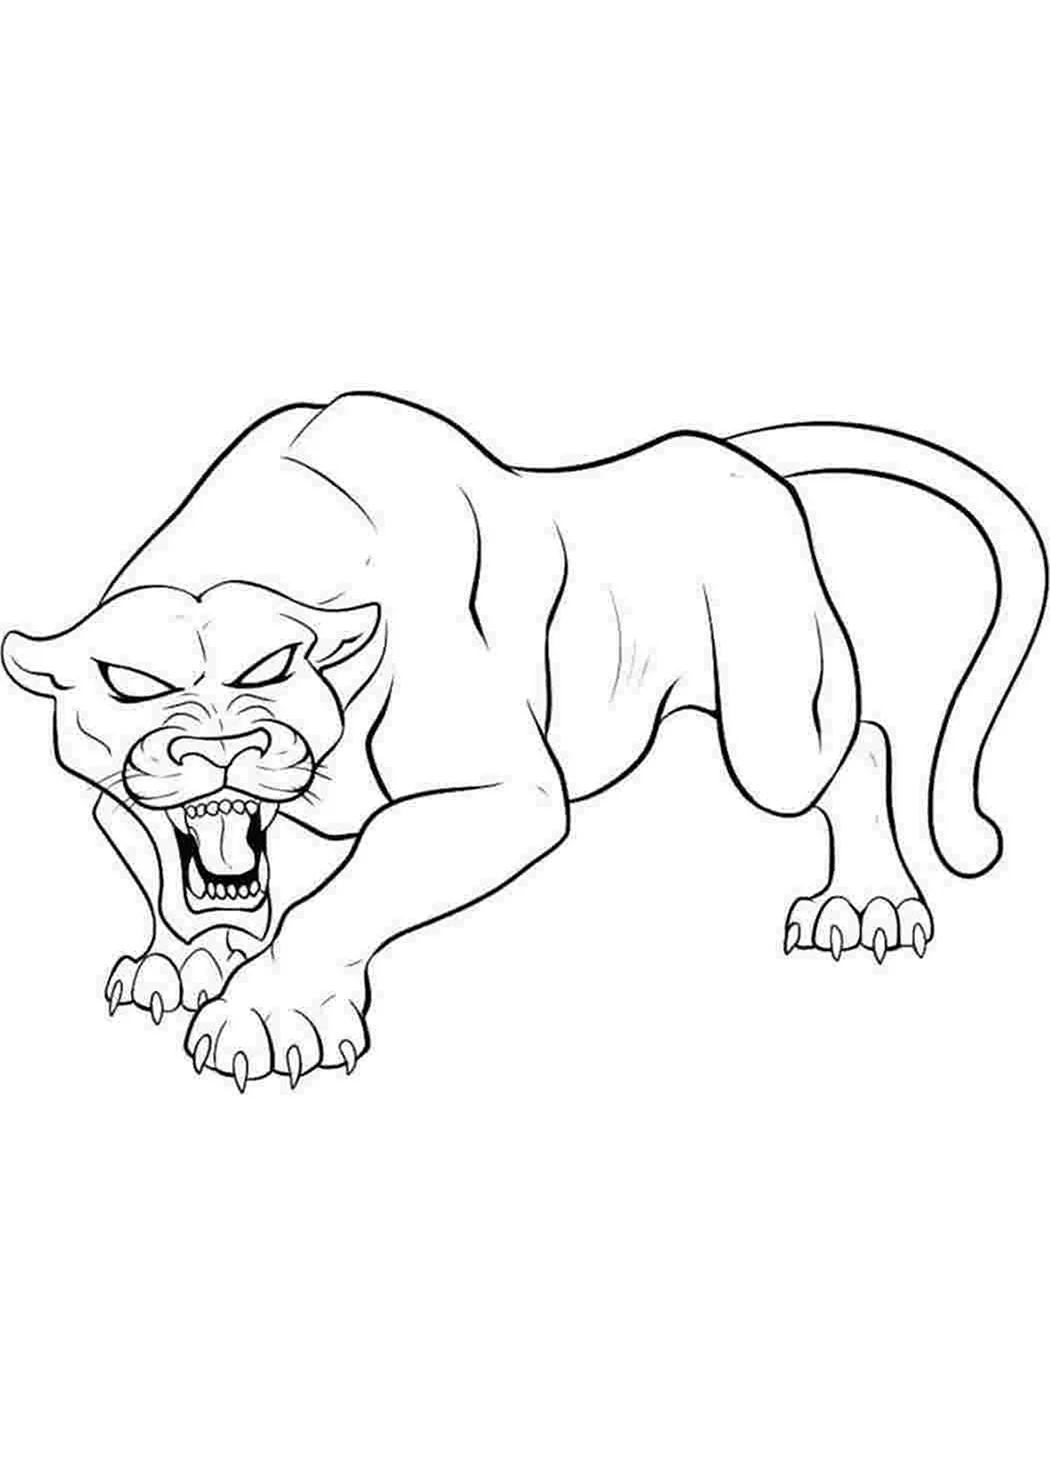 Рисунок Саблезубого тигра. Для срисовки